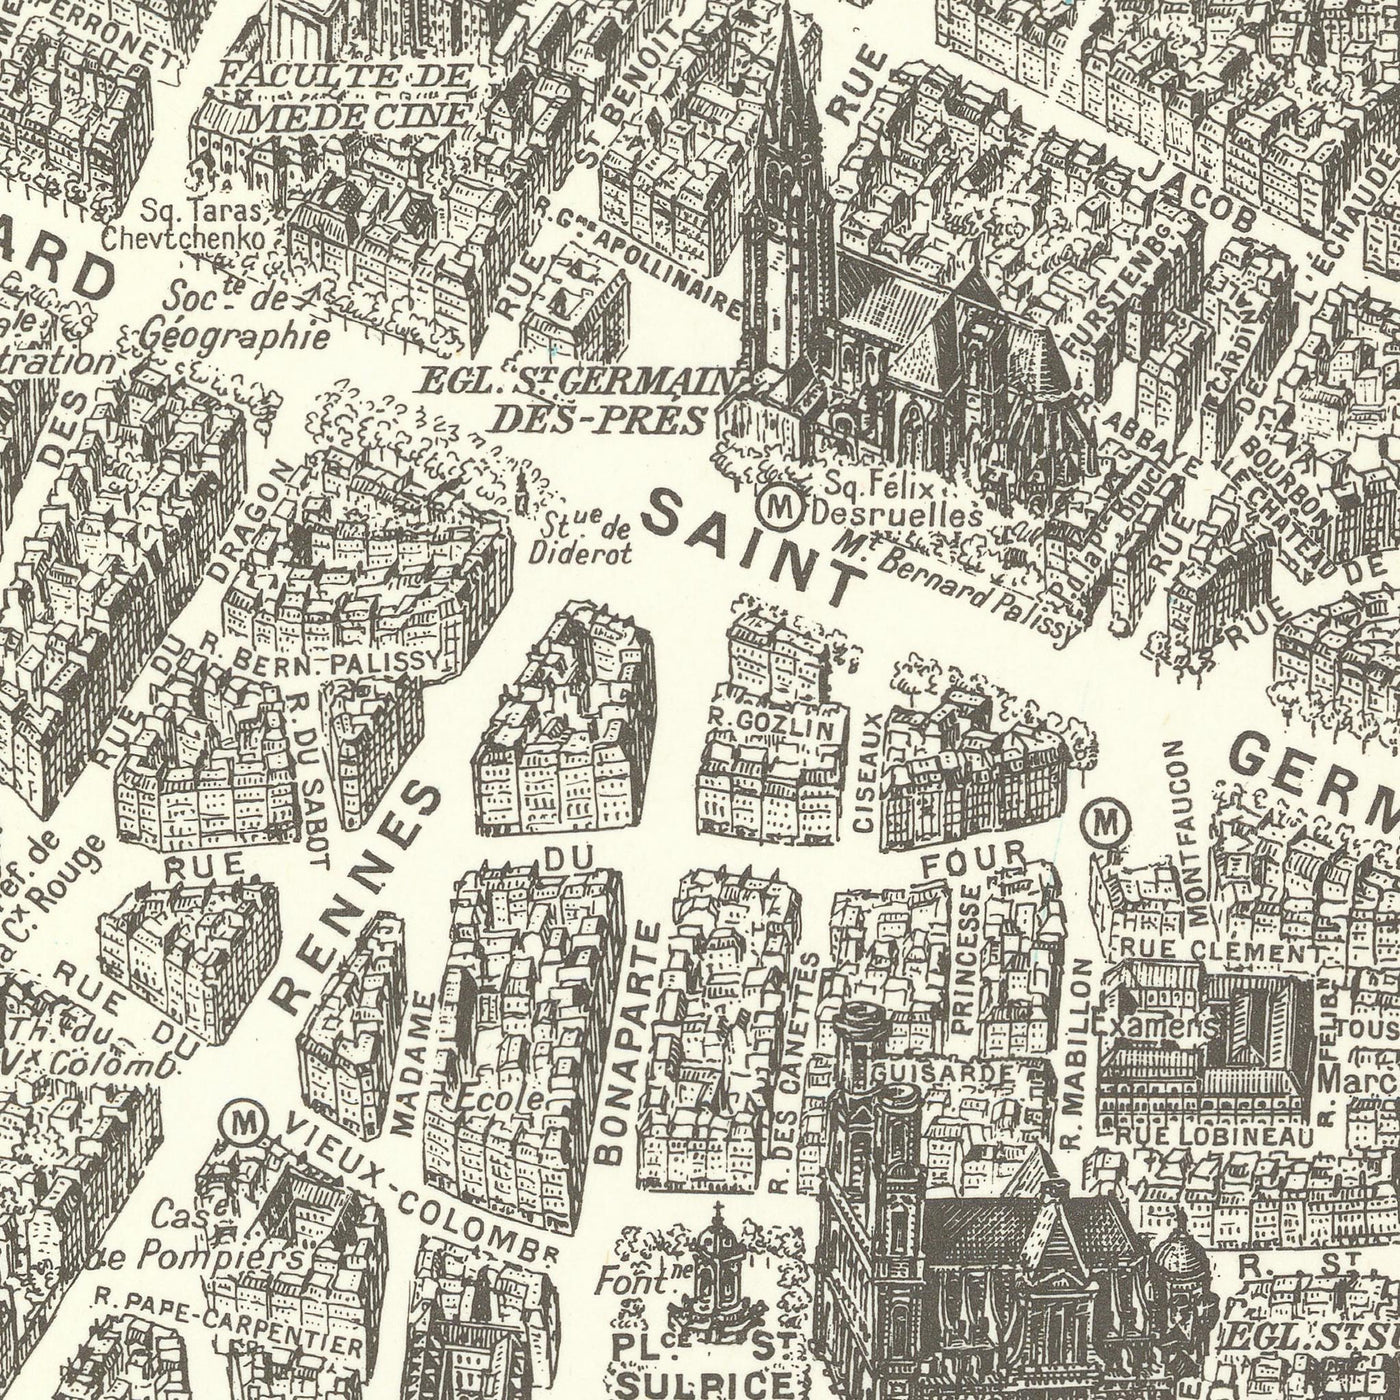 Old Birdseye Map of Paris by Peltier & Chardon, 1974: Eiffel Tower, Notre-Dame, Louvre, Montmartre, Seine